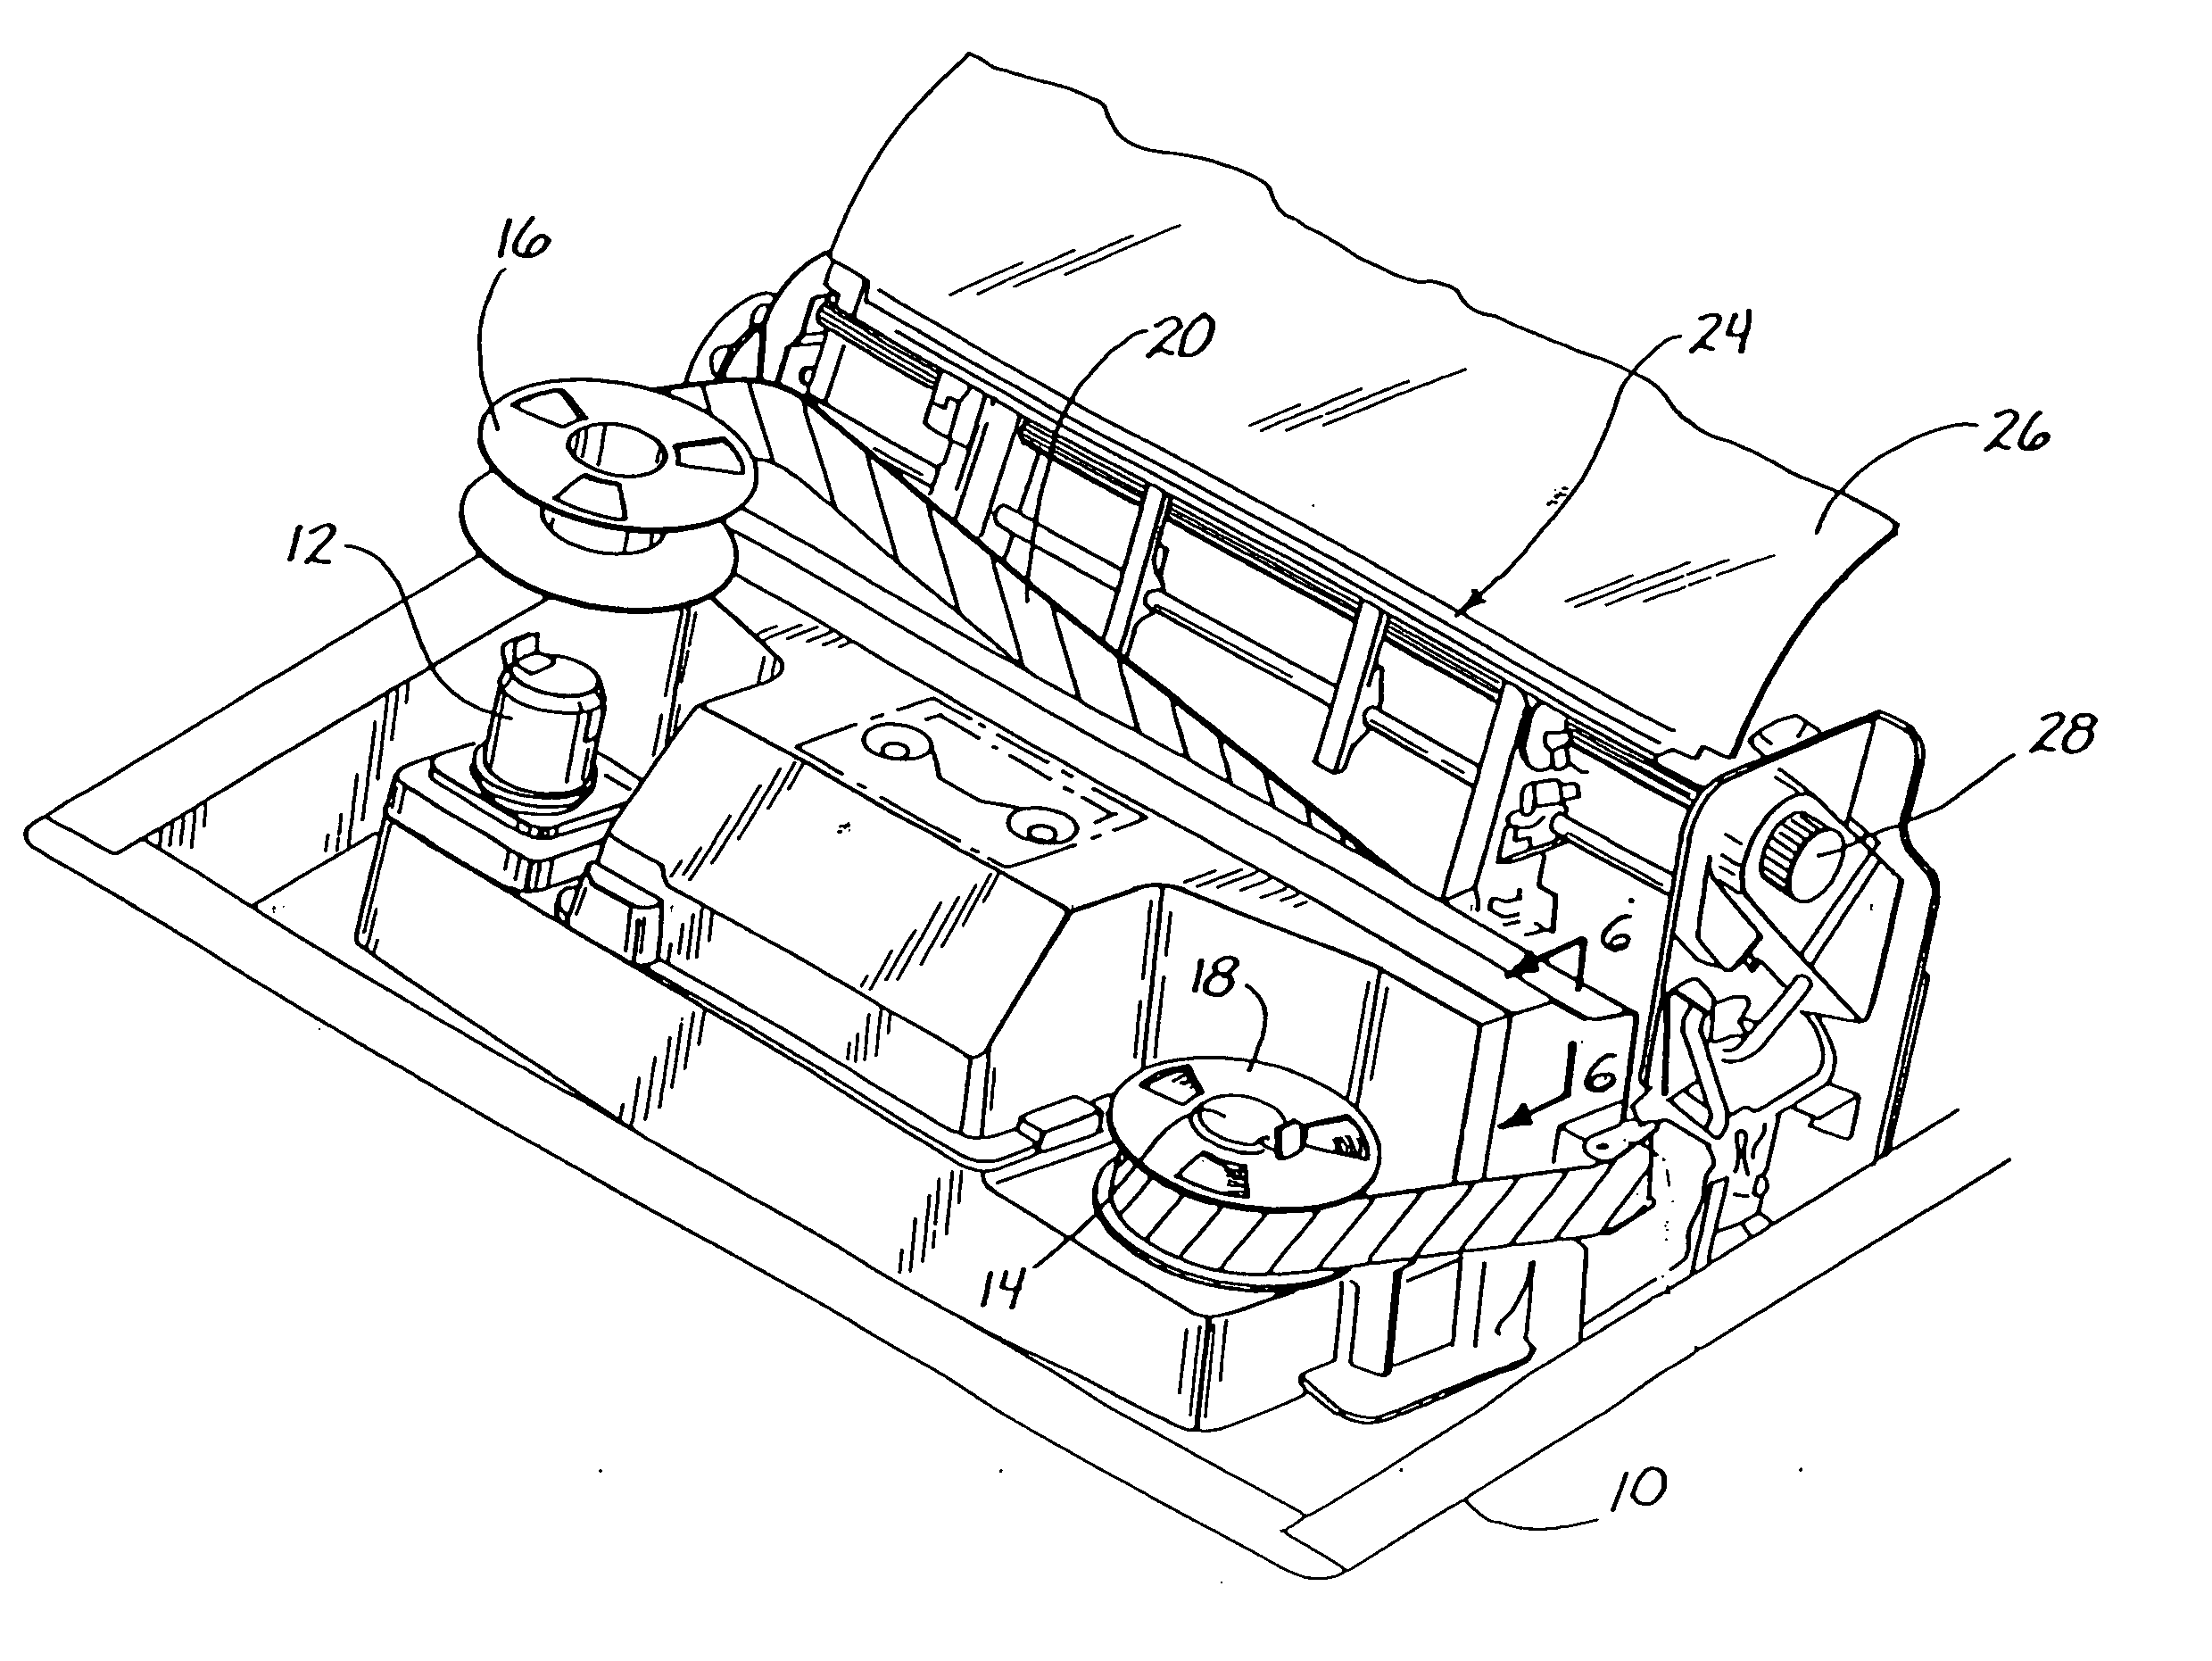 Multi-viscosity printer ink